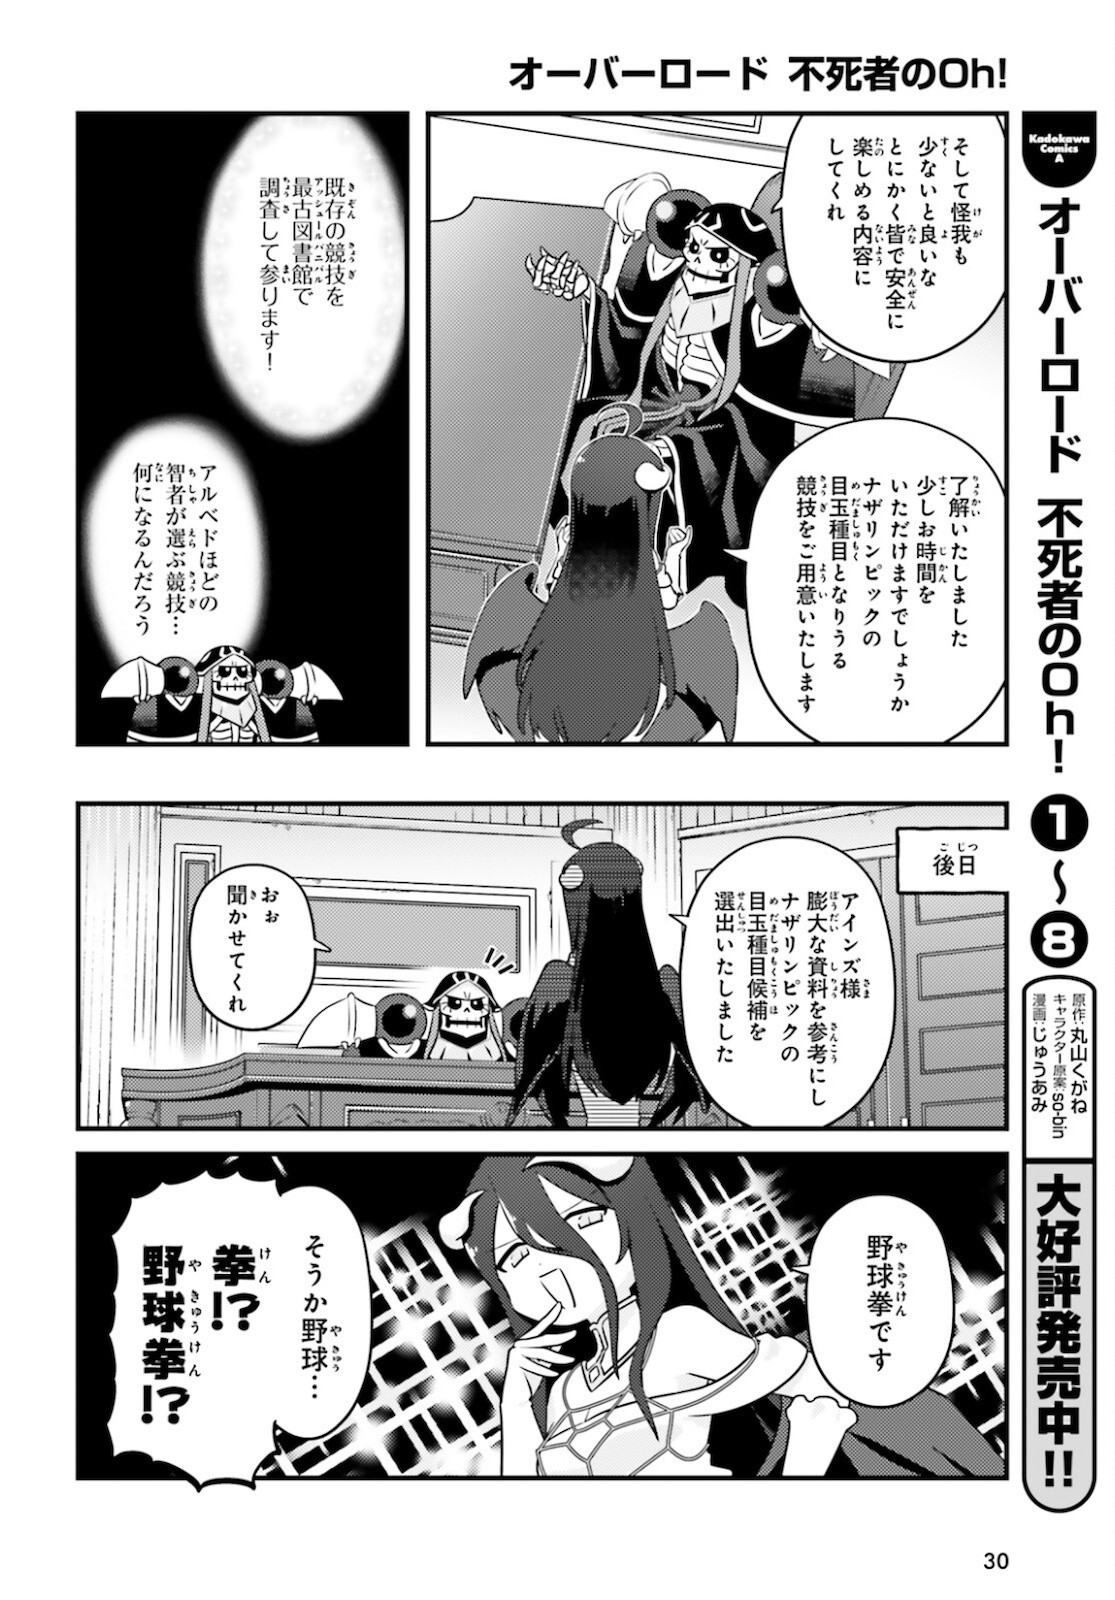 Overlord-Fushisha-no-Oh - Chapter 50 - Page 6